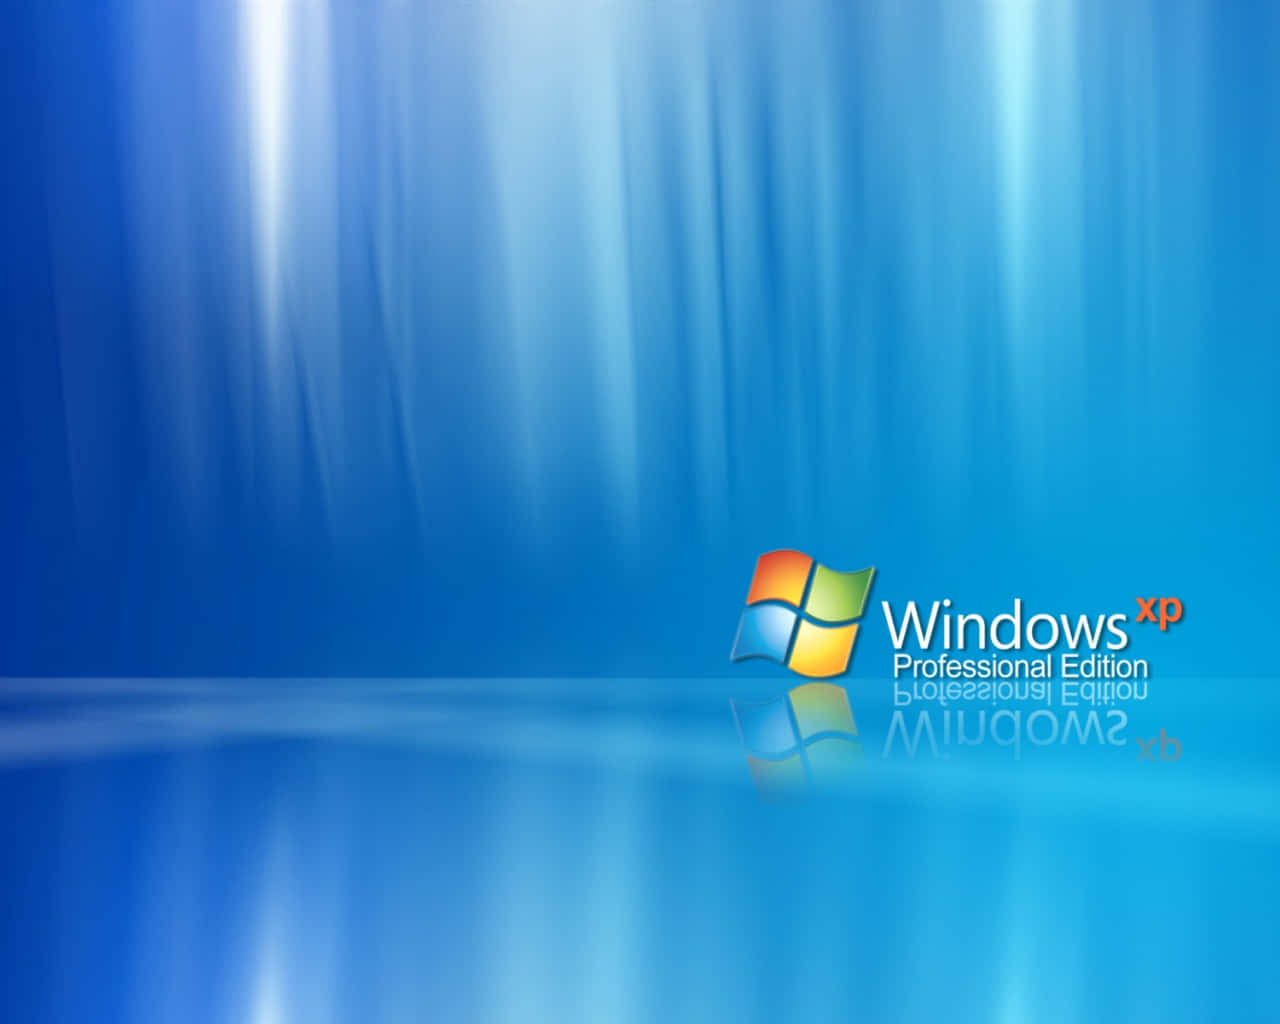 Genießensie Den Klassischen Windows Xp-desktop